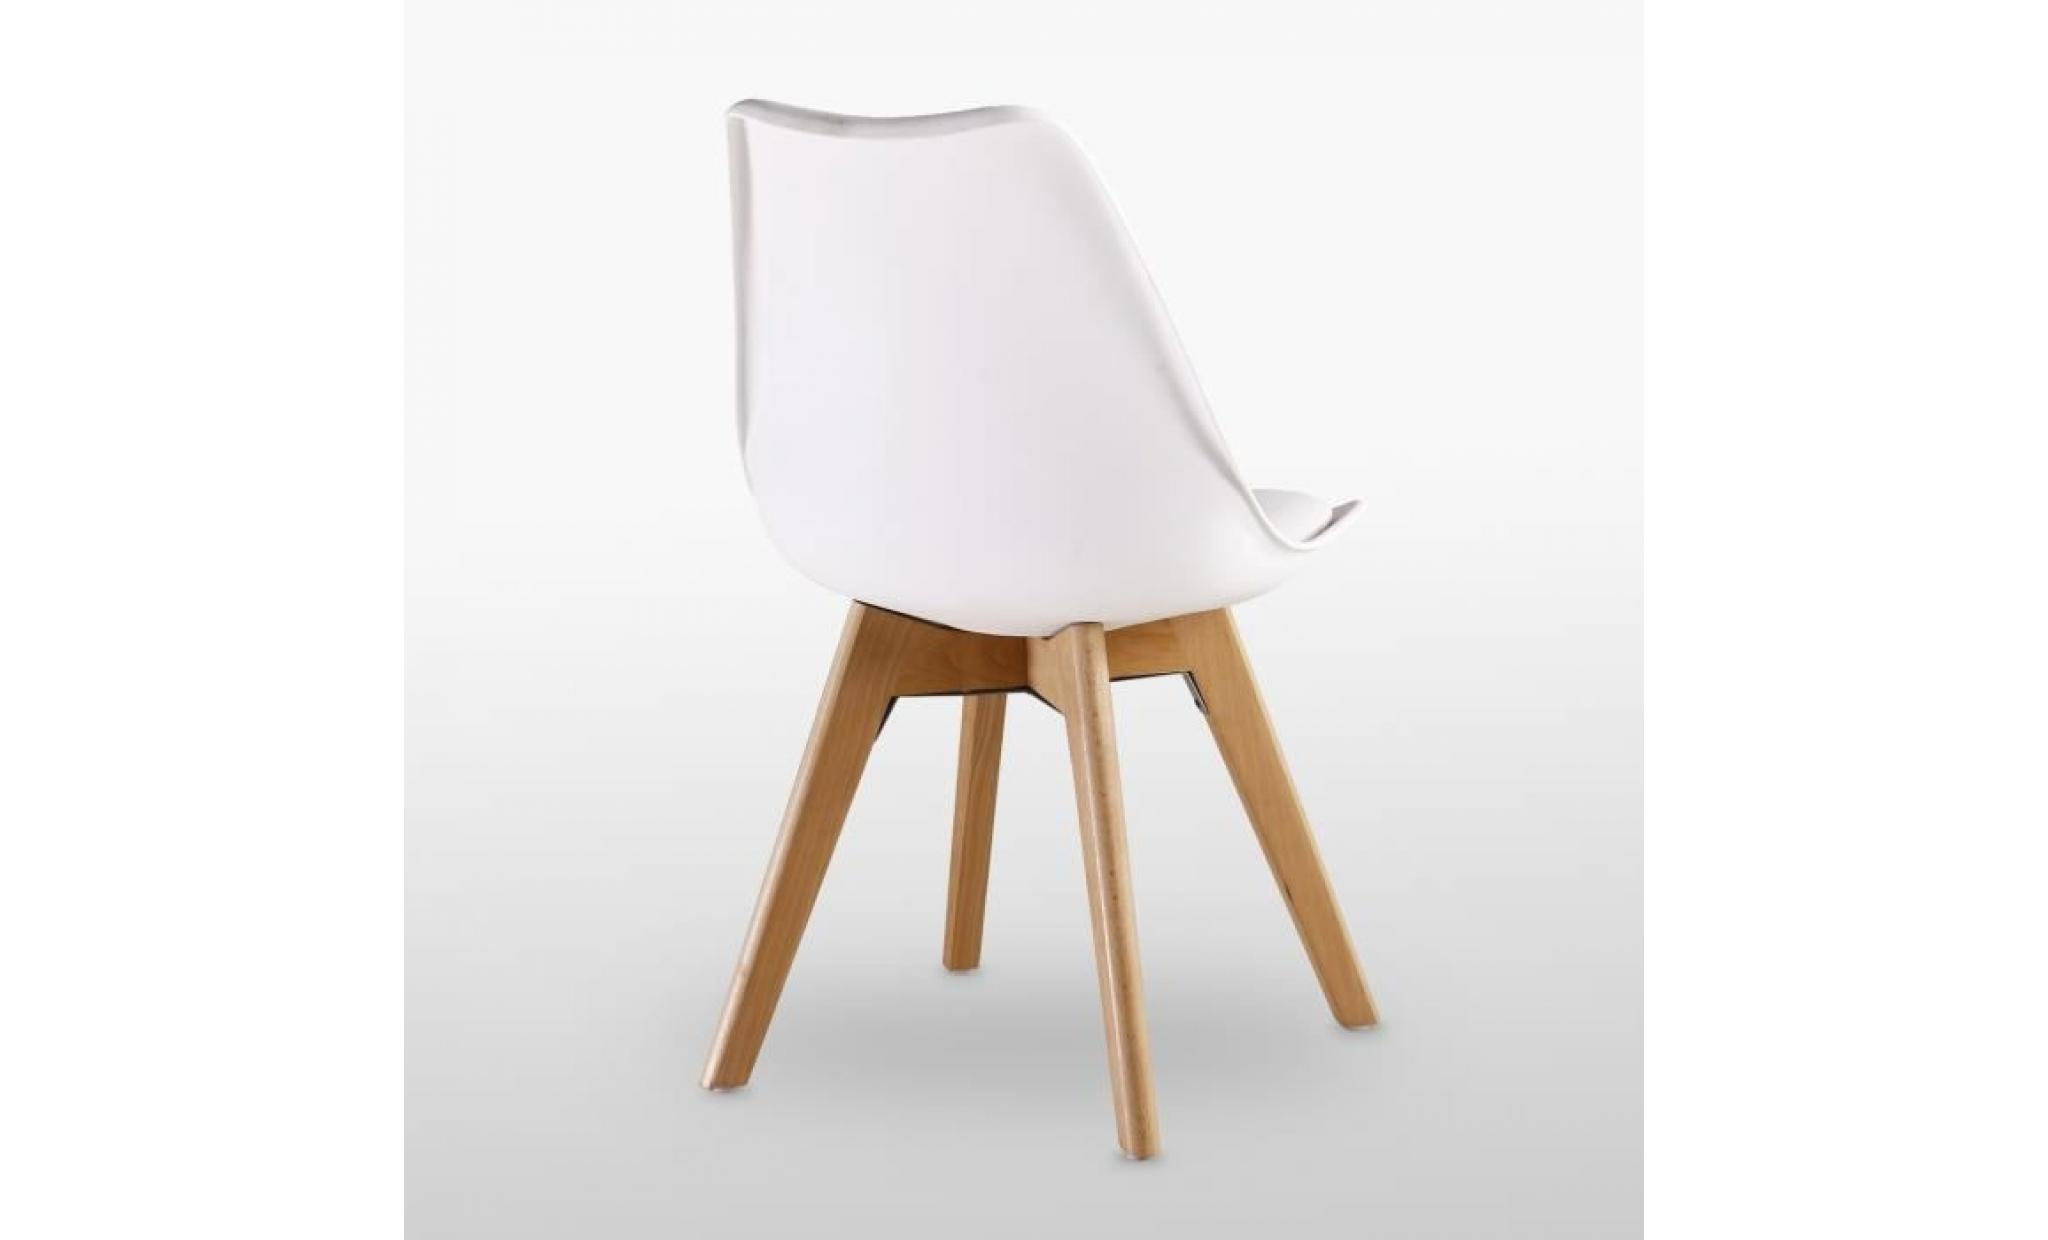 ensemble salle à manger moderne lorenzo   table blanche + 4 chaises blanches   design scandinave pas cher